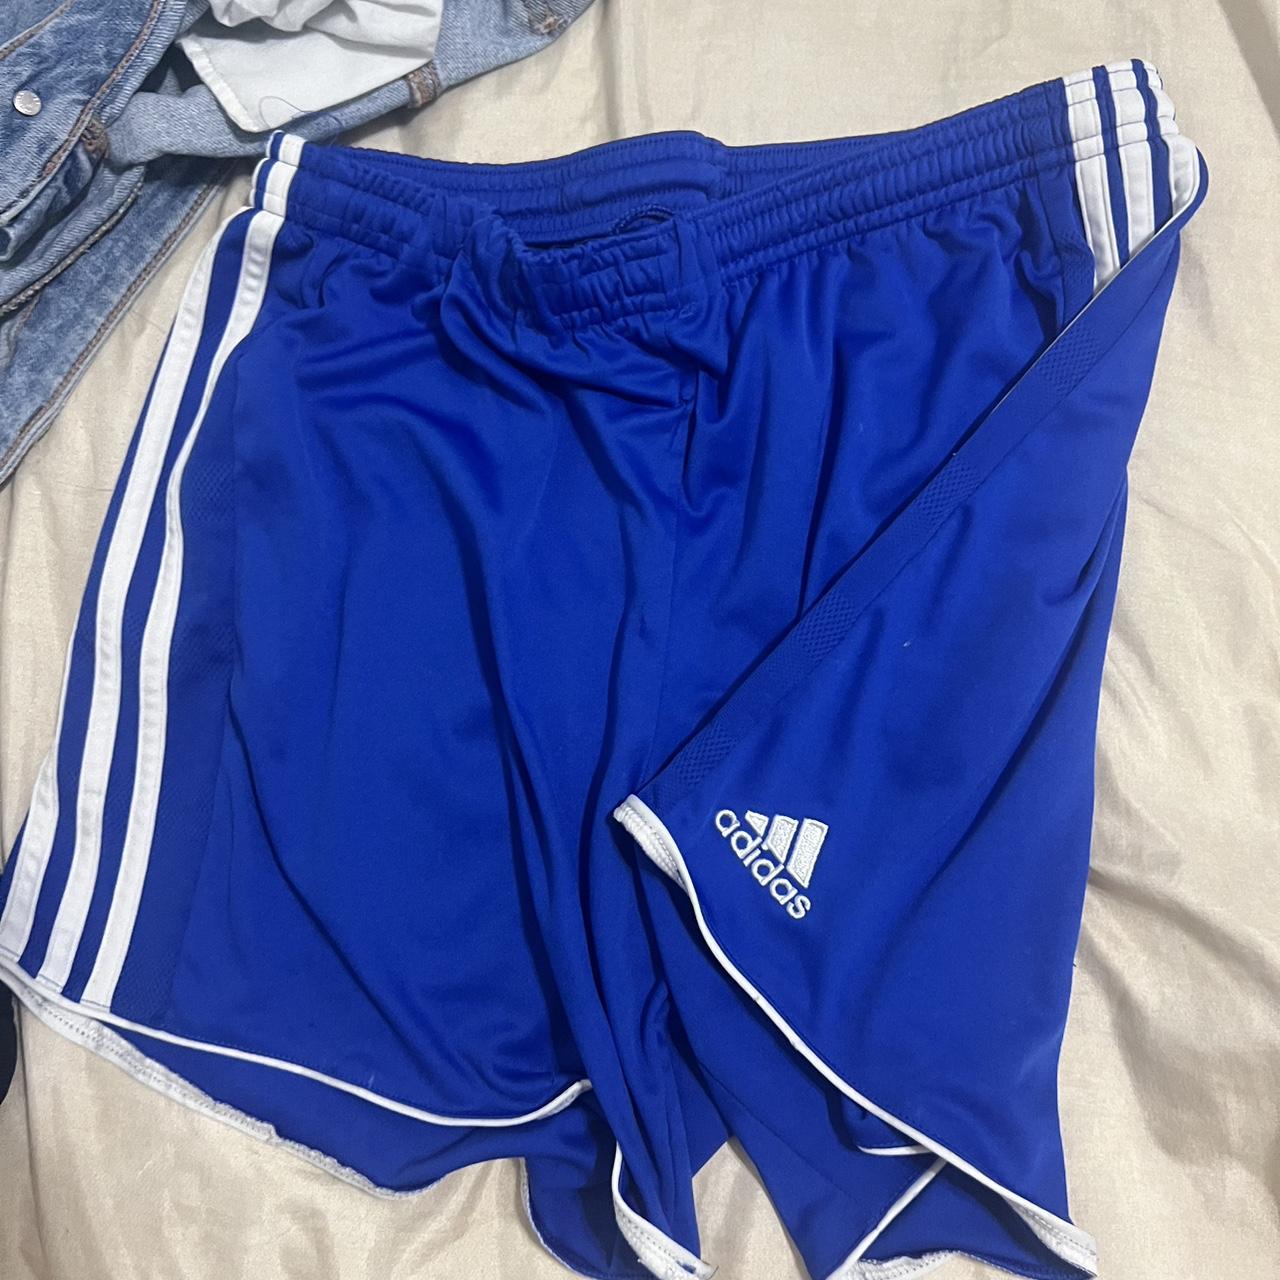 Adidas blue soccer shorts size m #adidas #blue... - Depop